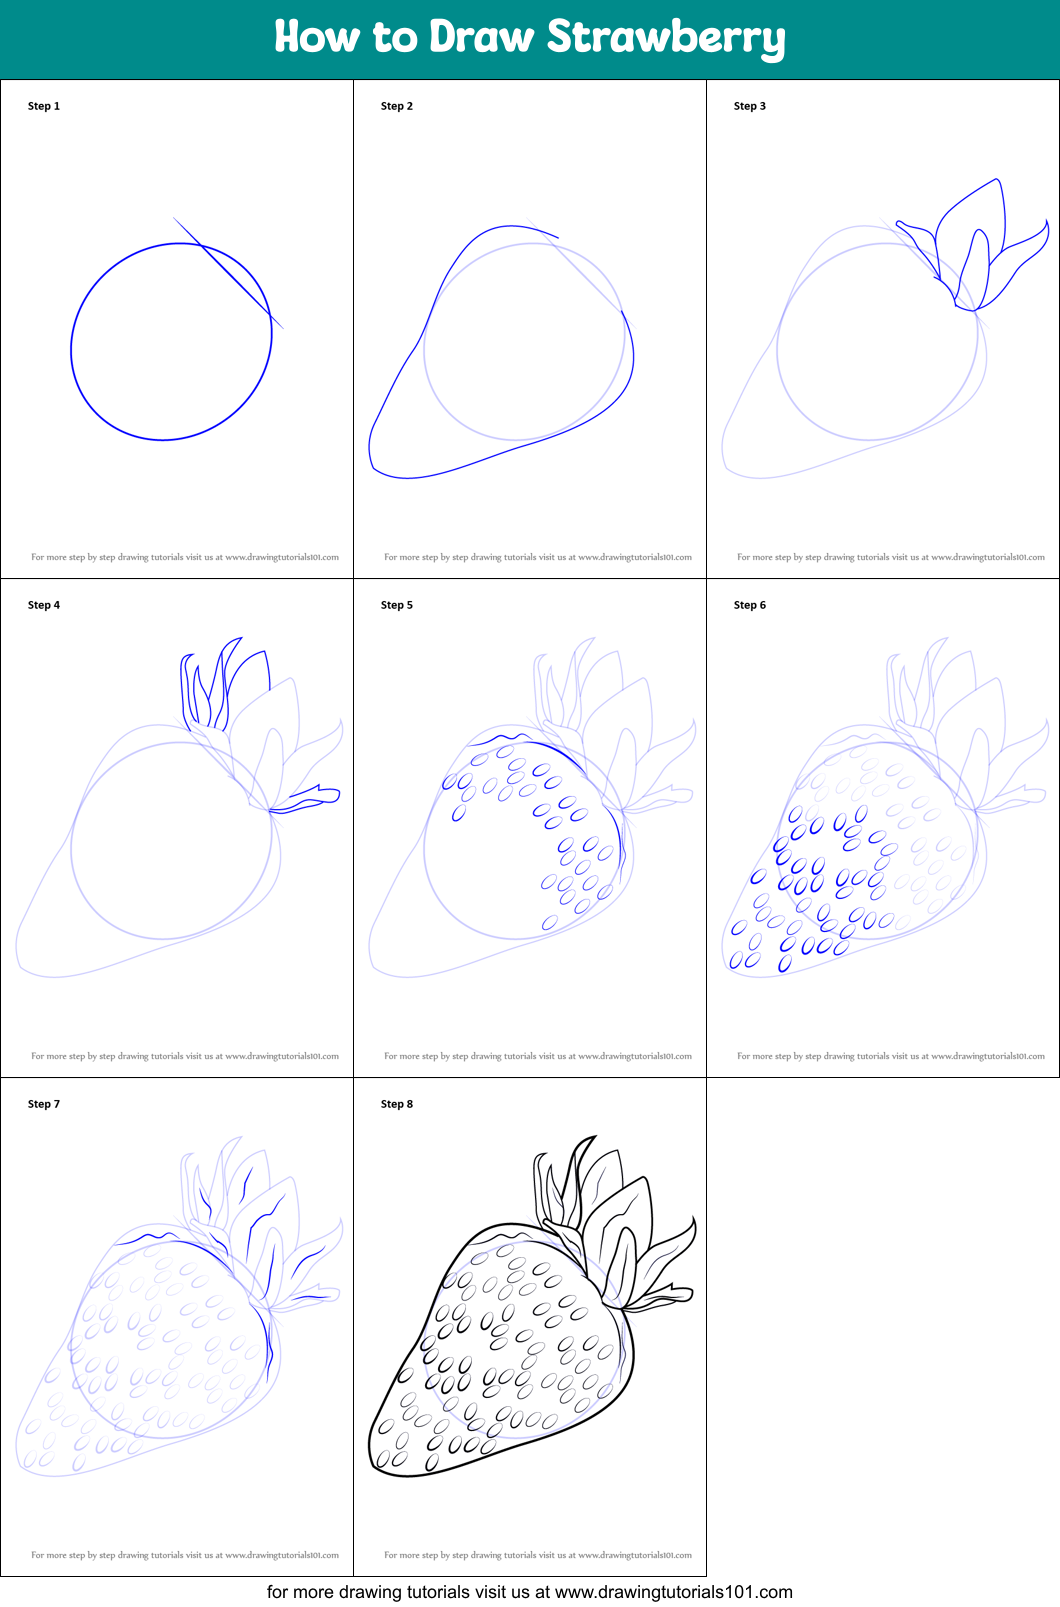 How to Draw Strawberry (Fruits) Step by Step | DrawingTutorials101.com